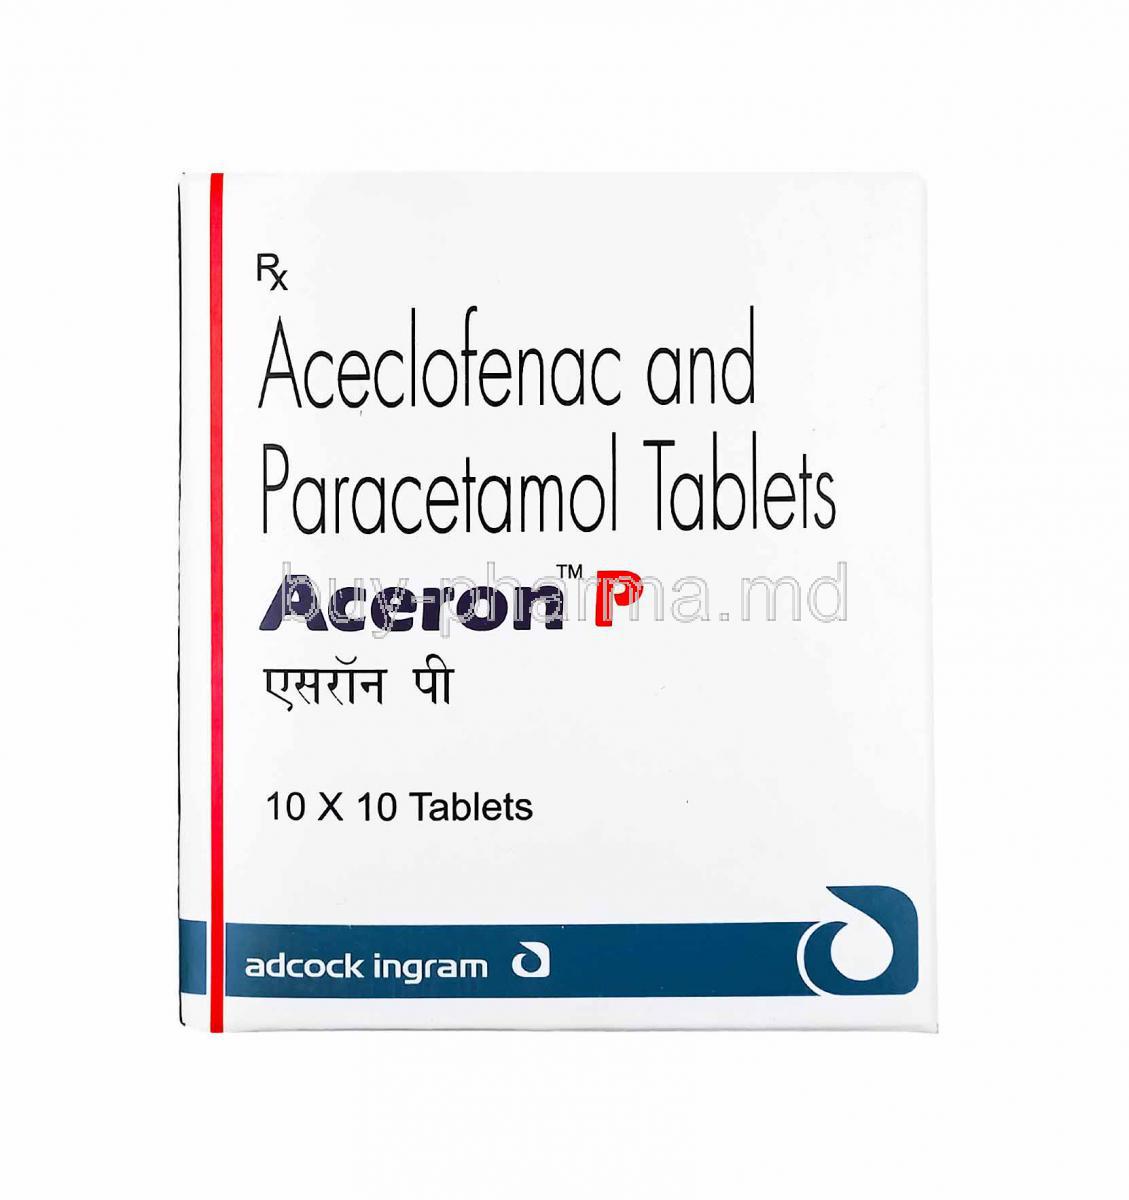 Aceron P, Aceclofenac and Paracetamol